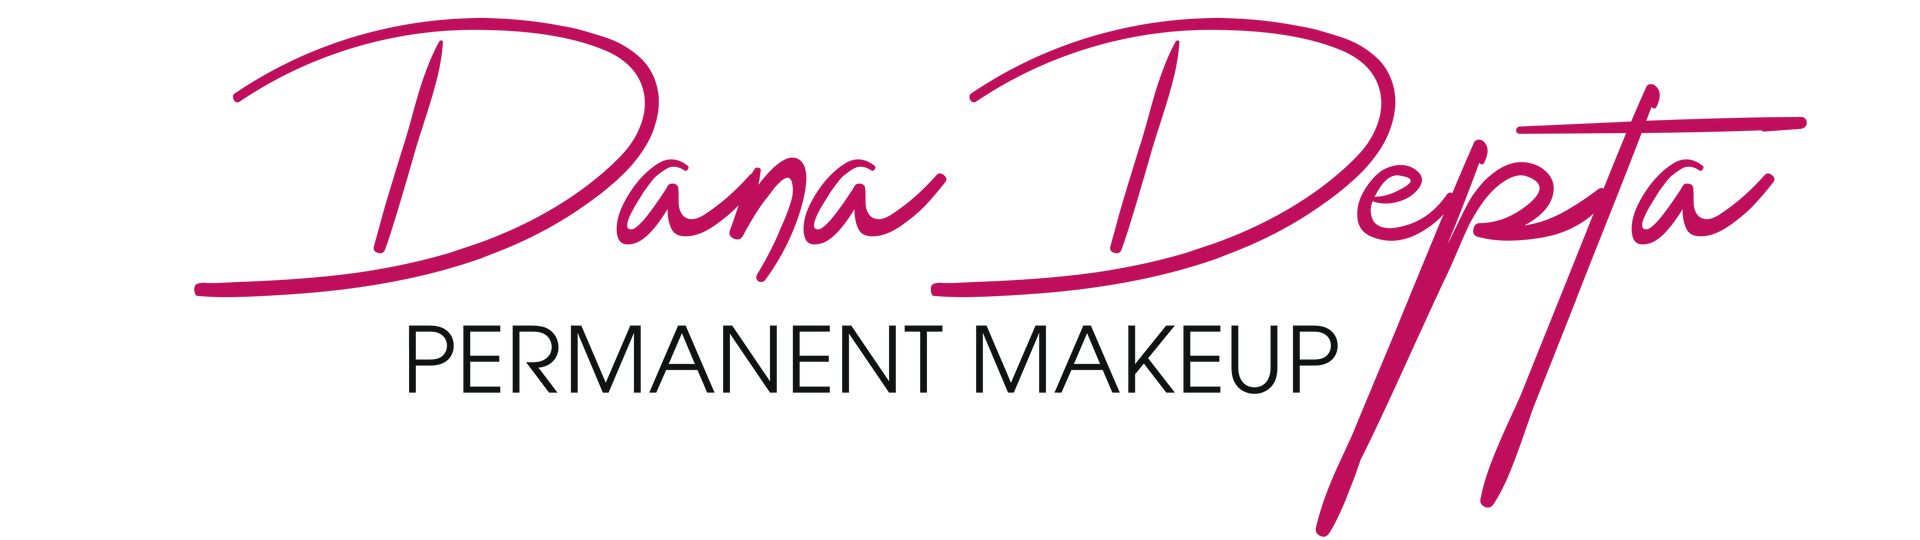 Dana Depta Permanent Makeup logo